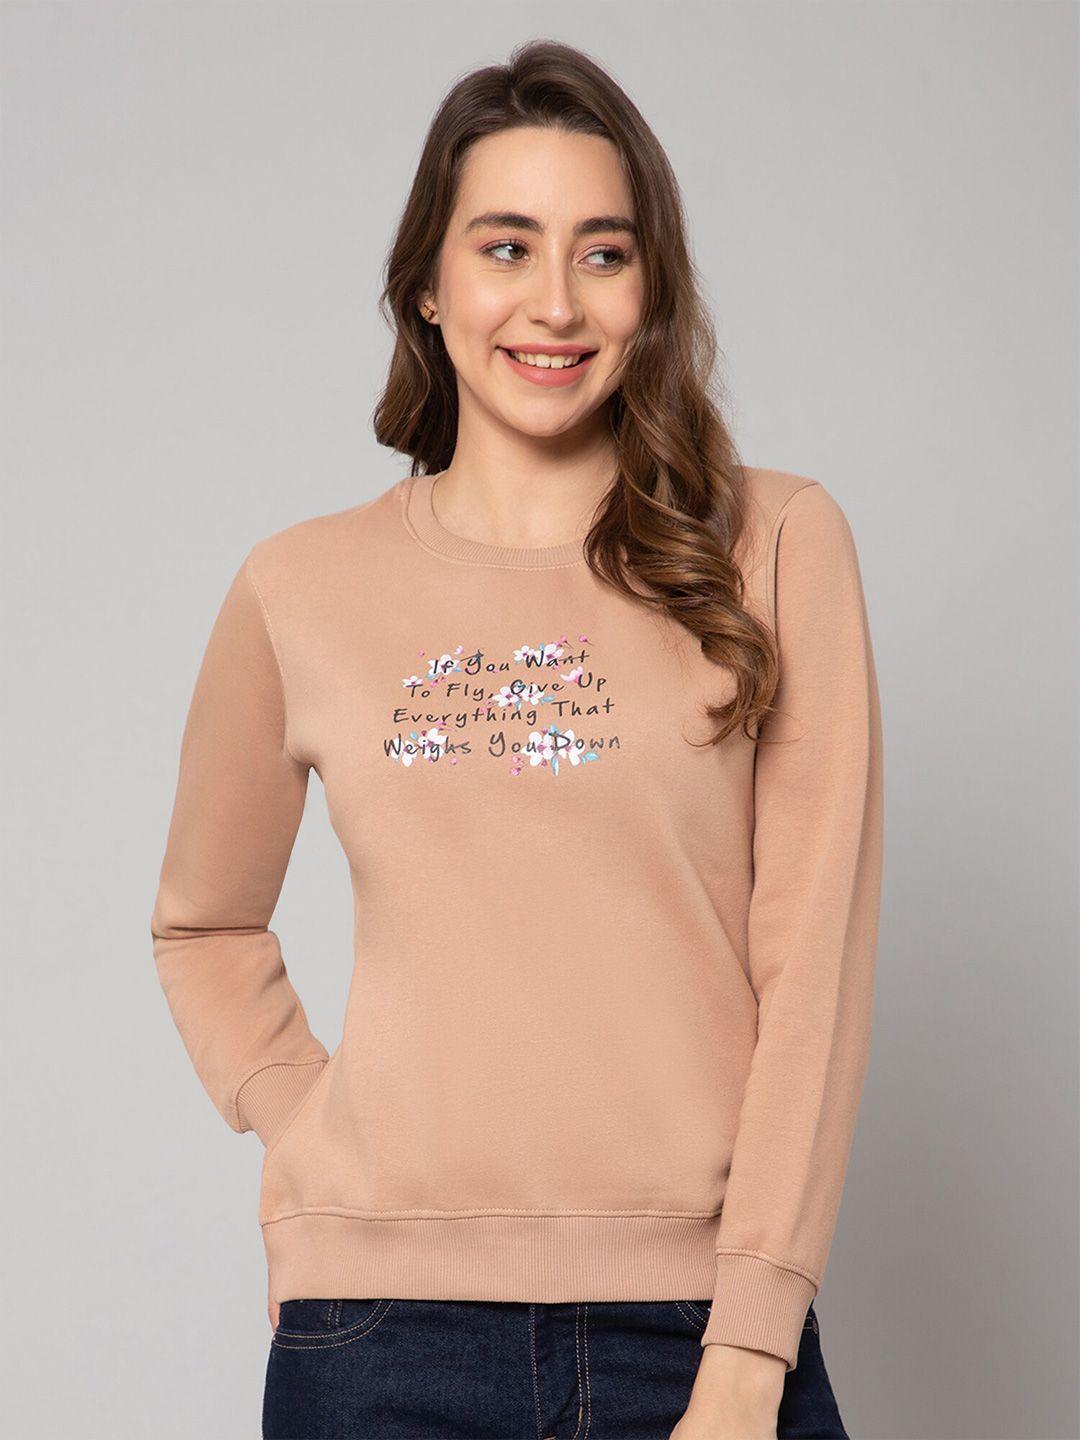 cantabil women typography printed sweatshirt